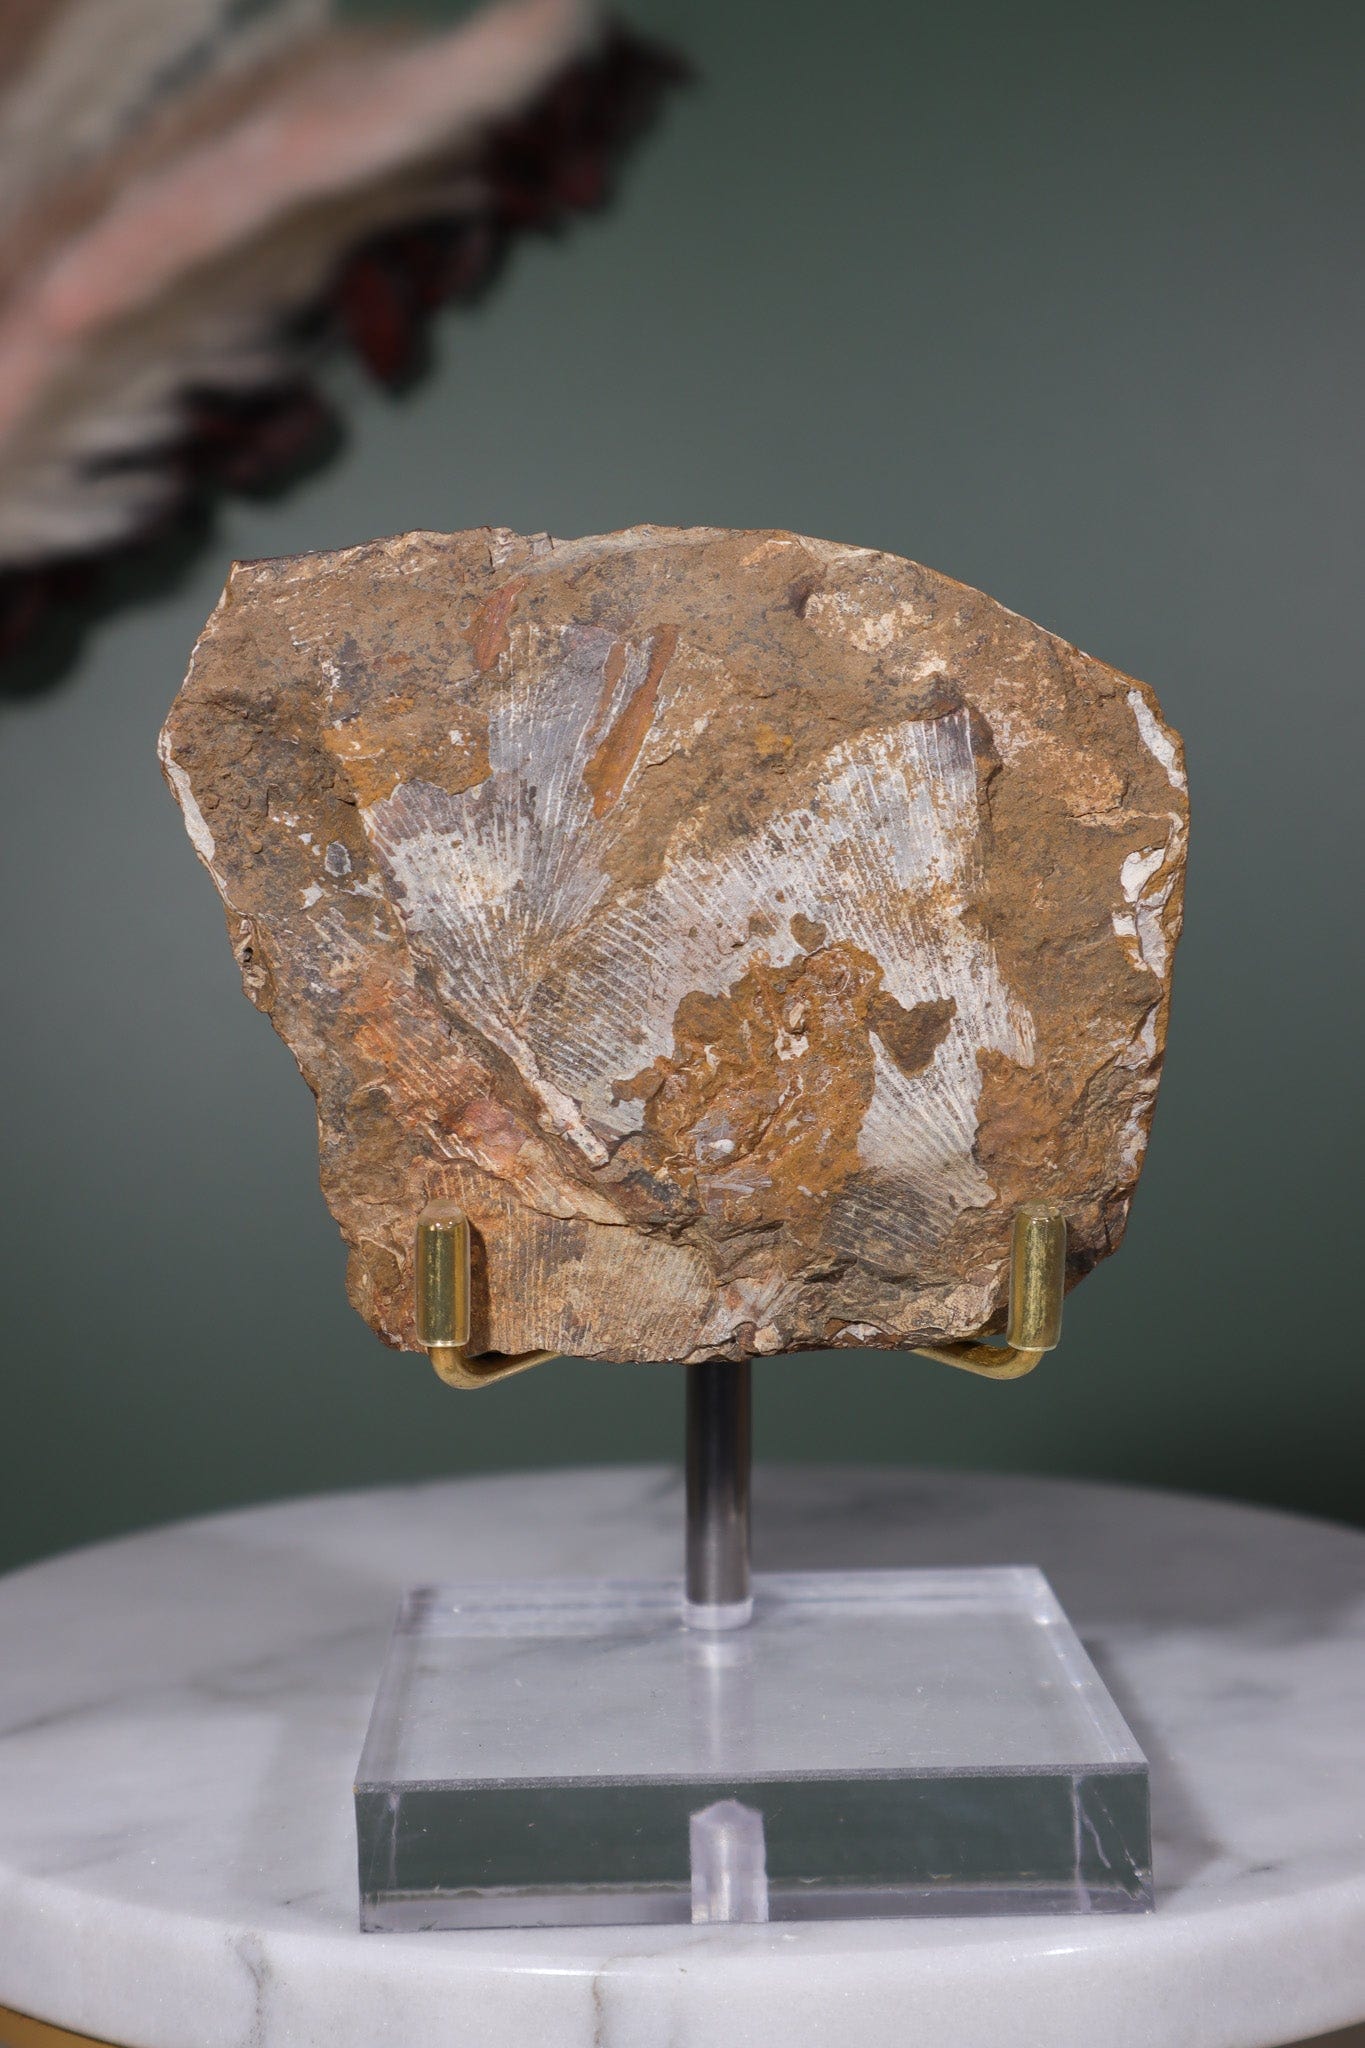 Ginkgo Leaf Fossil 8x6cm Fossil Tali & Loz Crystals